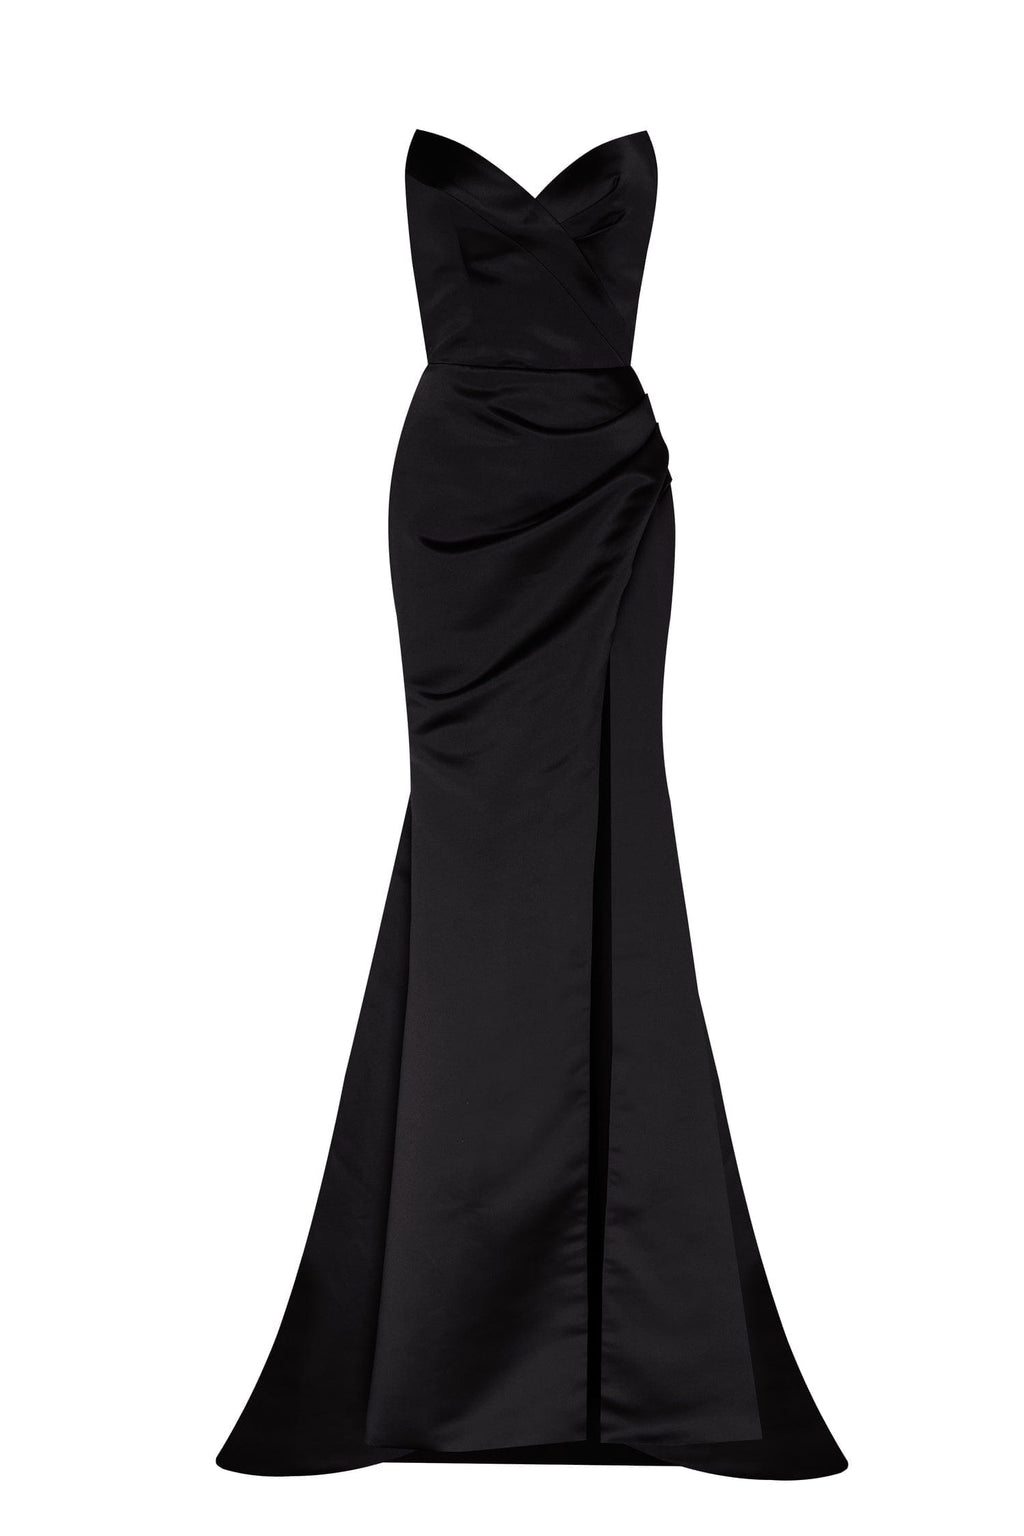 Evening Gowns – Explore Elegant Evening Gowns For Women Online